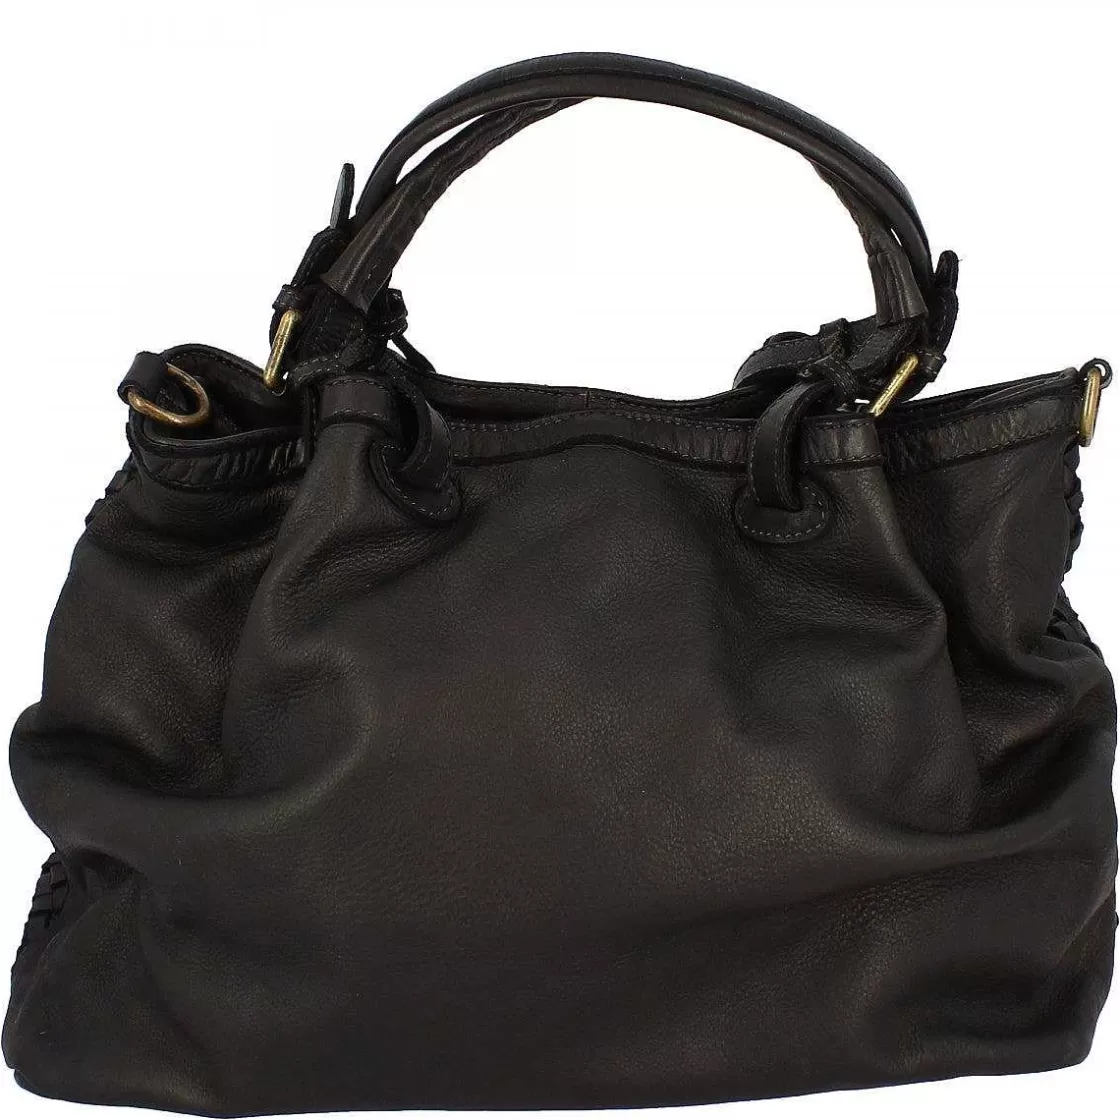 Leonardo Petrarca Women'S Bag Handmade In Black Woven Leather With Shoulder Strap Online